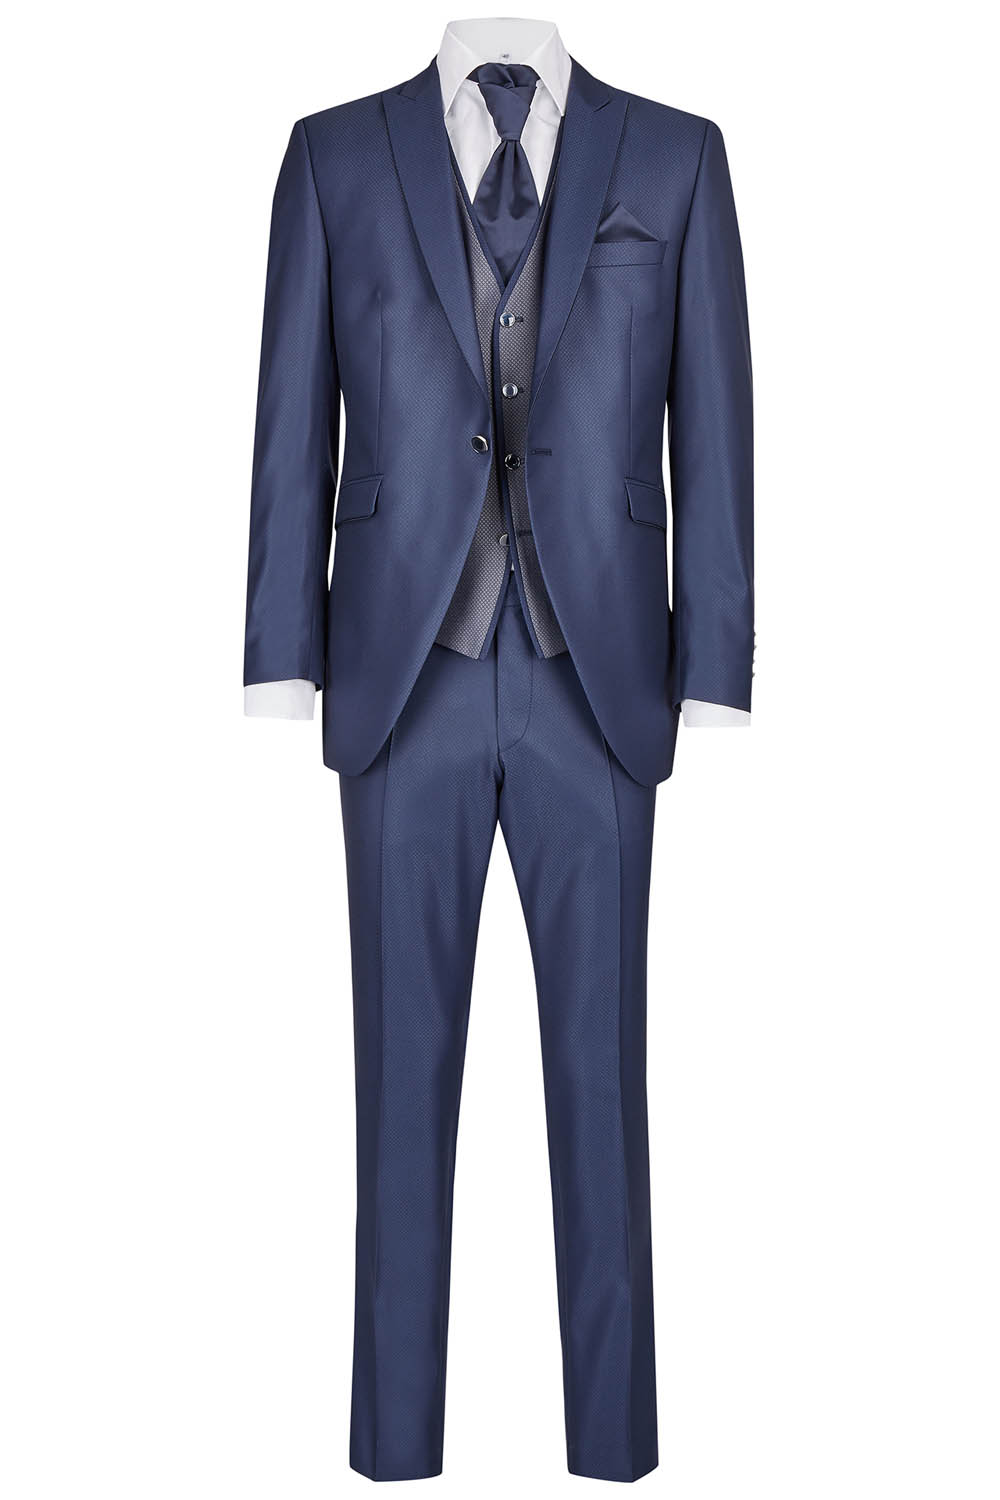 Blue Drop 8 3 Piece Suit - Tom Murphy's Formal and Menswear